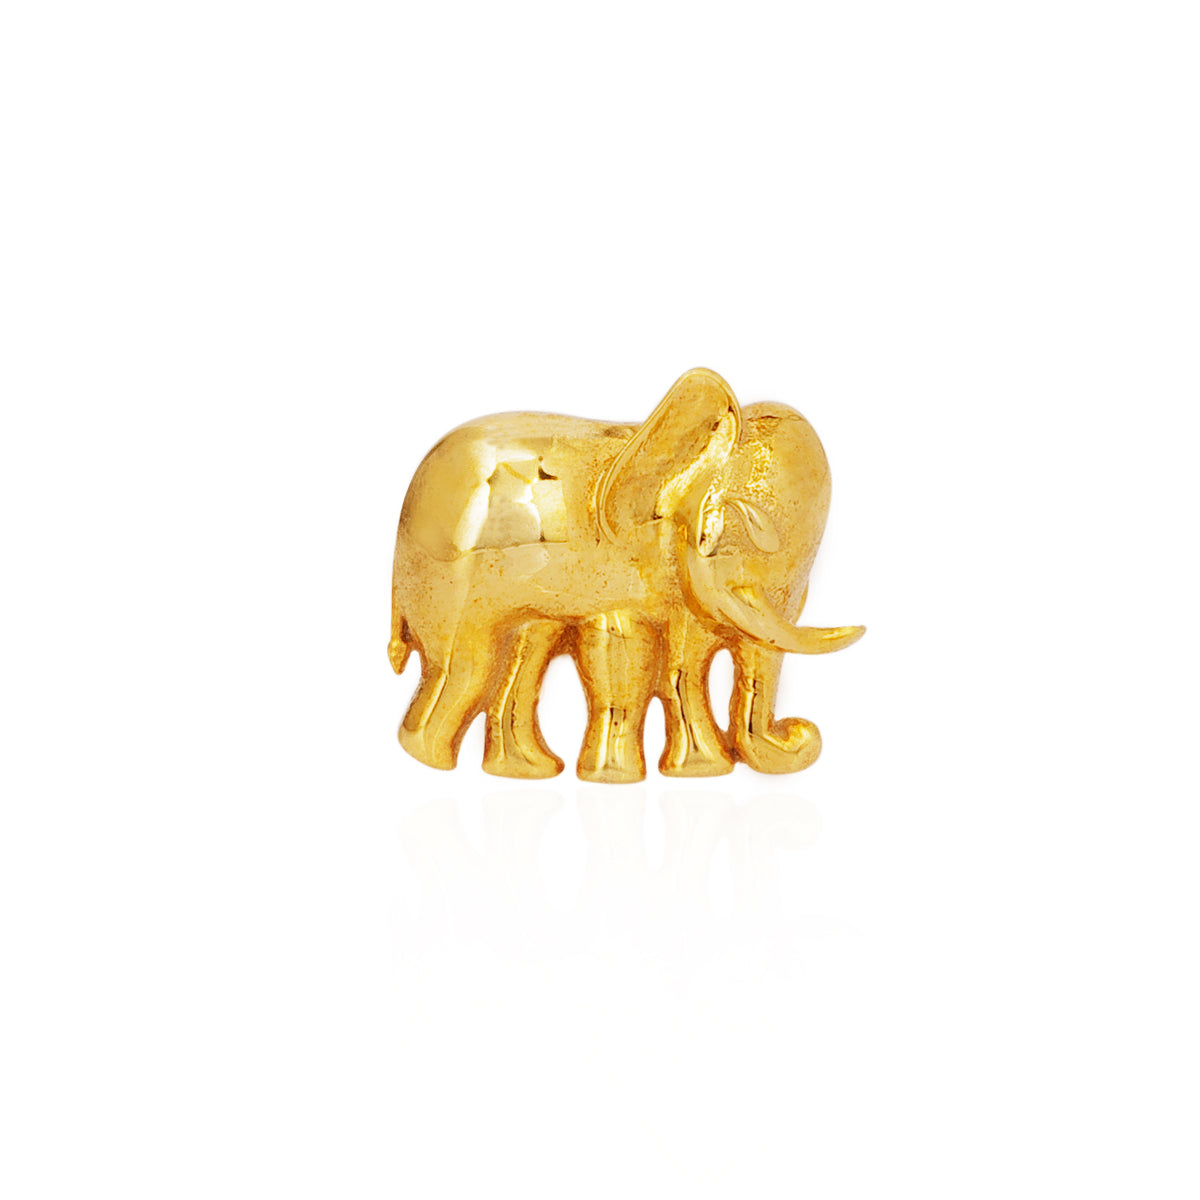 GOLD CUT-OUT ELEPHANT CUFFLINKS